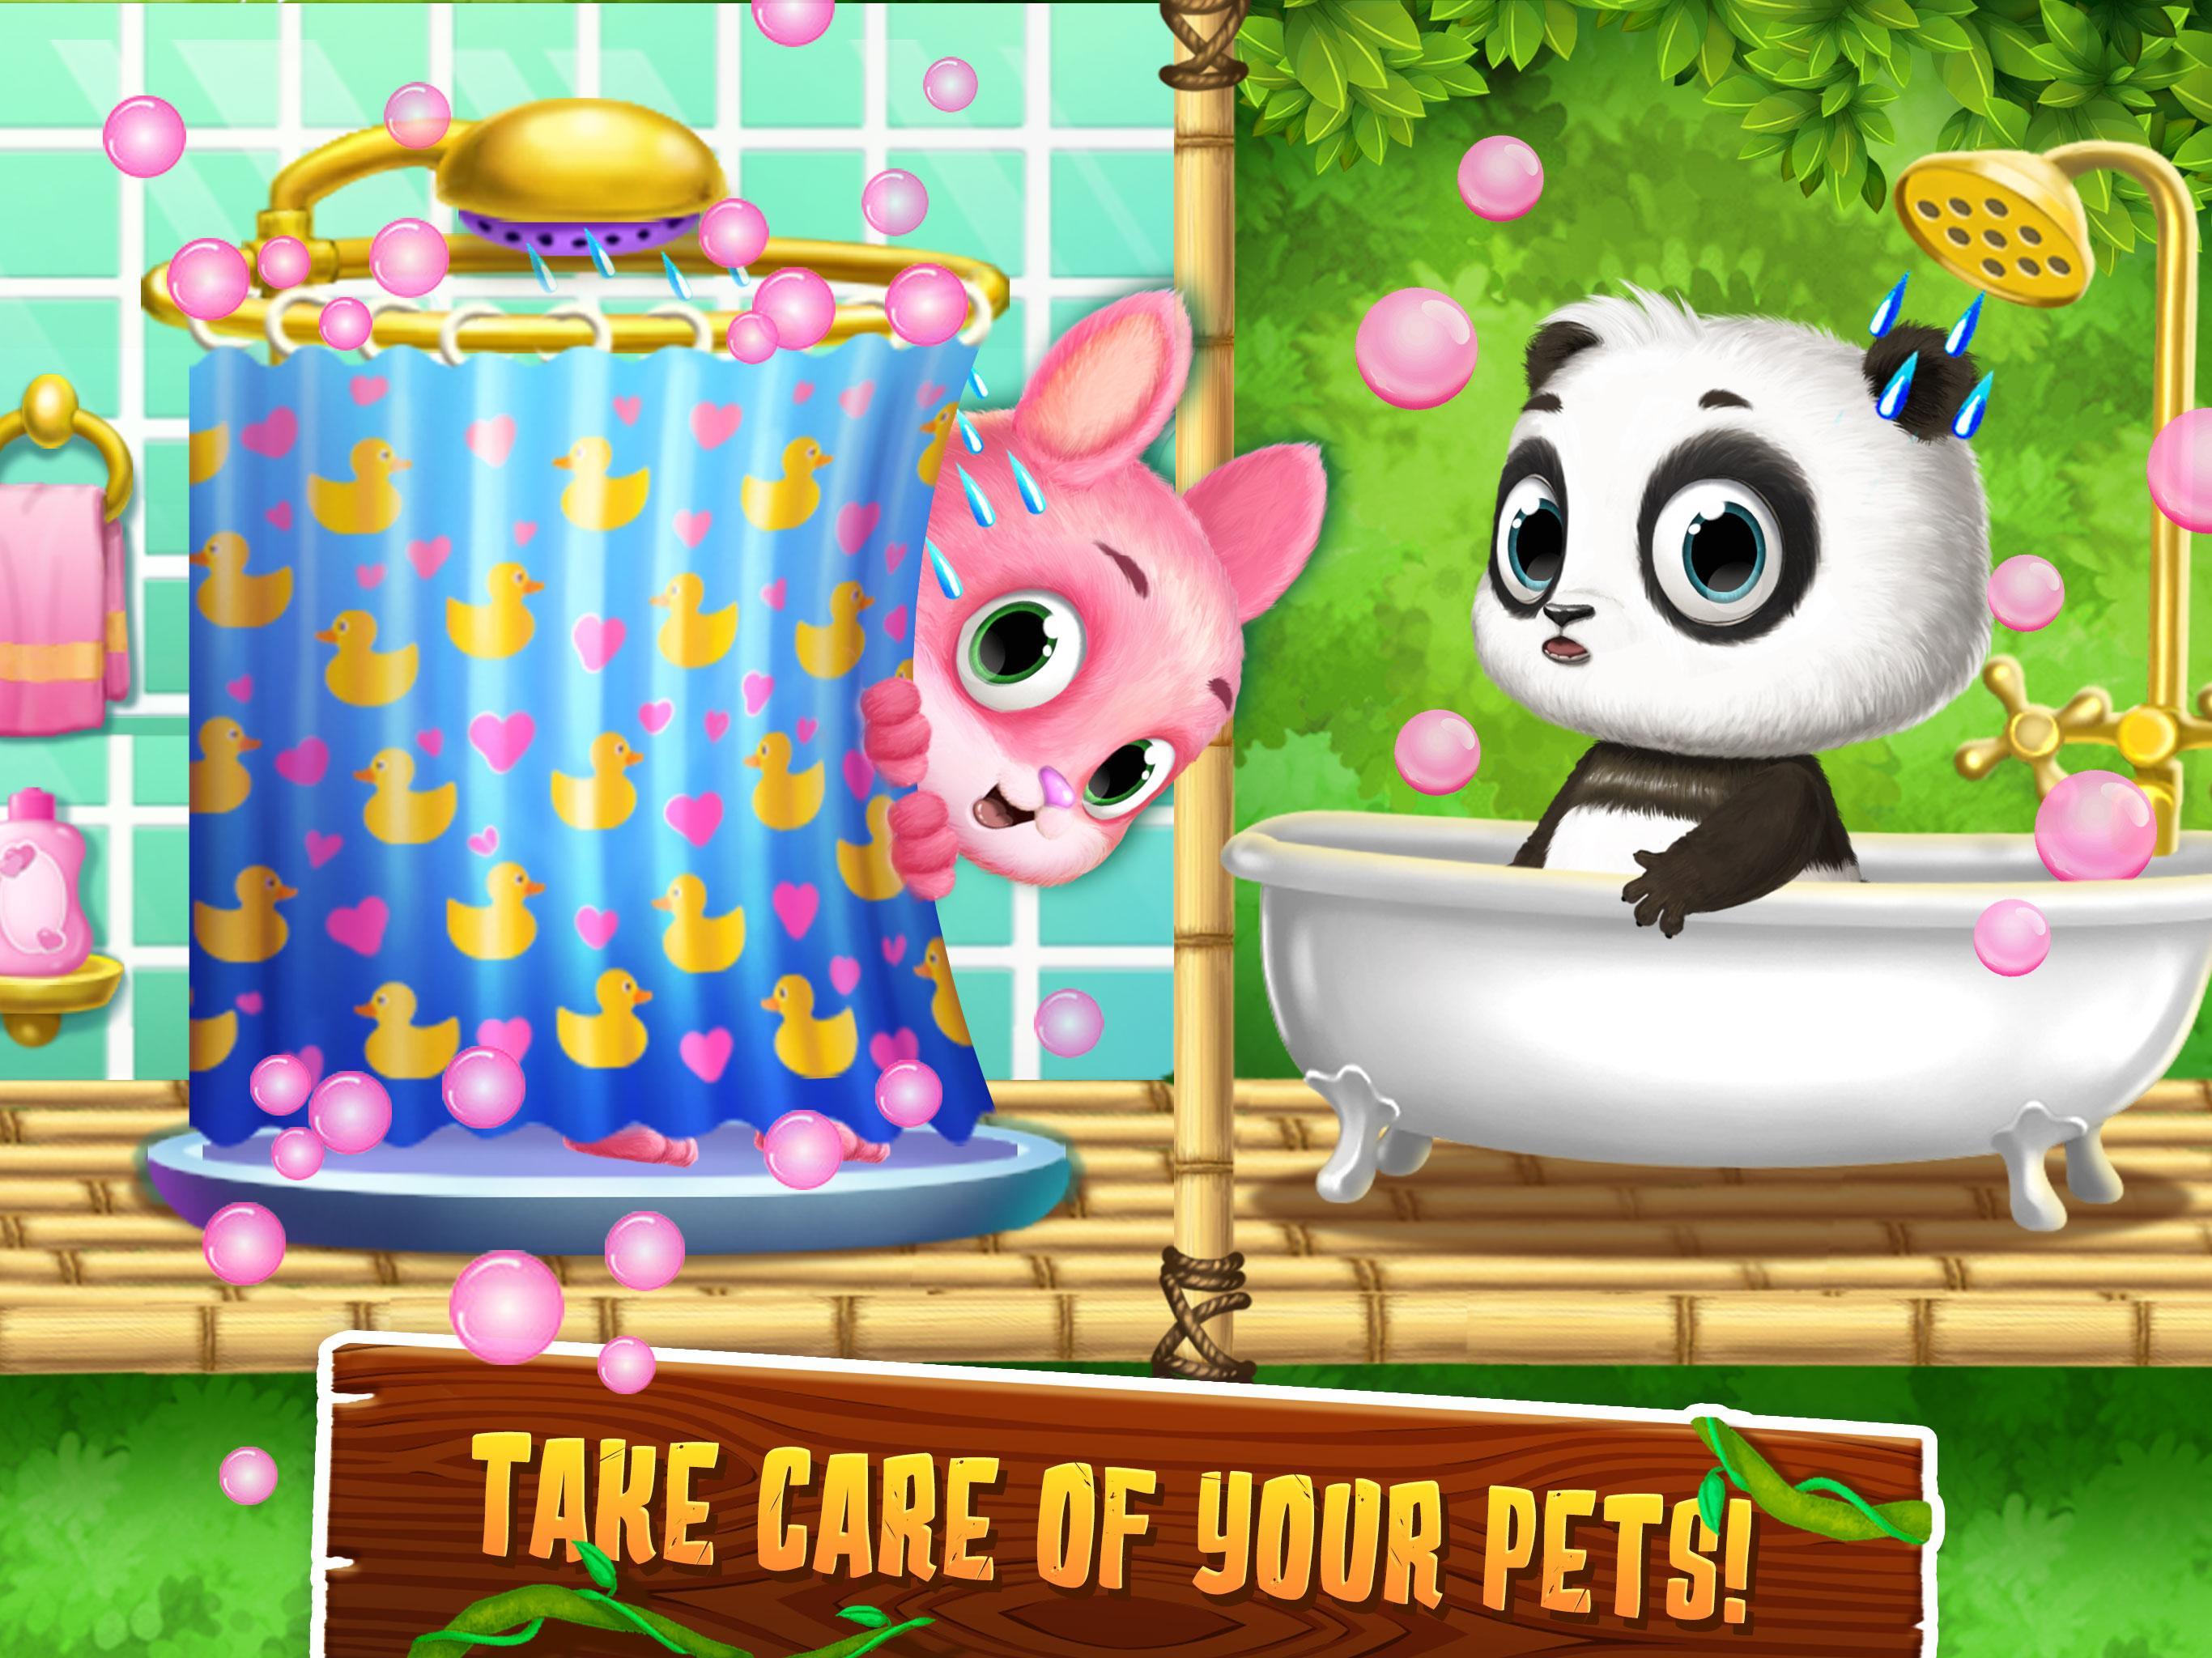 Panda Lu Treehouse - Build & Play with Tiny Pets 1.0.454 Screenshot 17